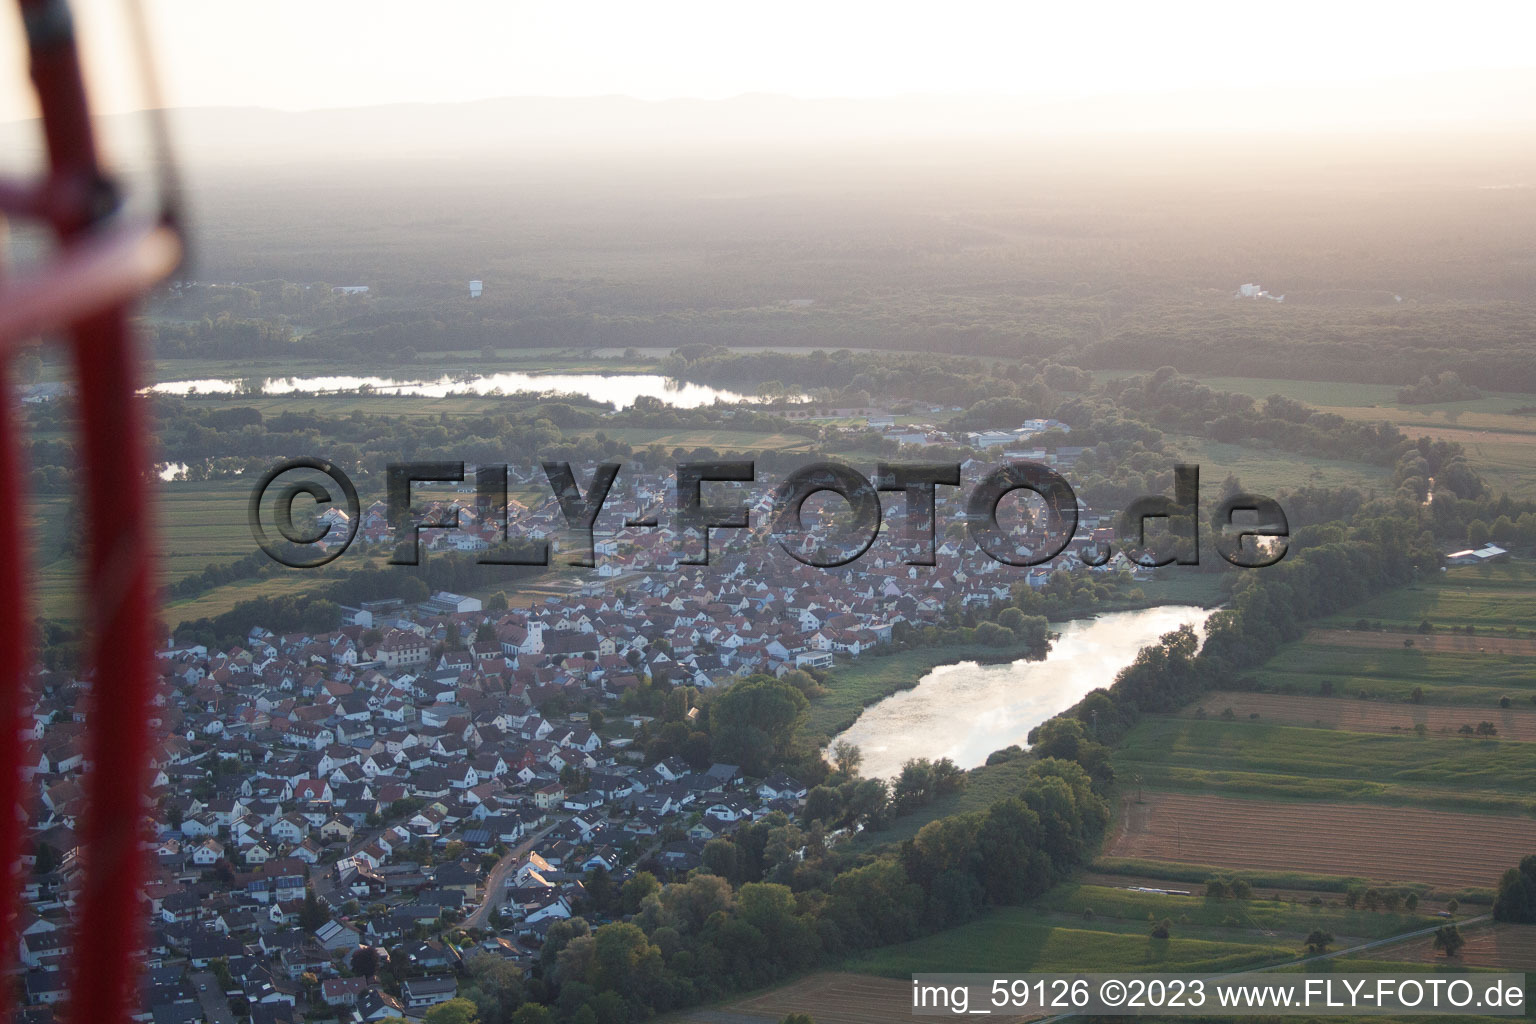 Neuburg in the state Rhineland-Palatinate, Germany from above